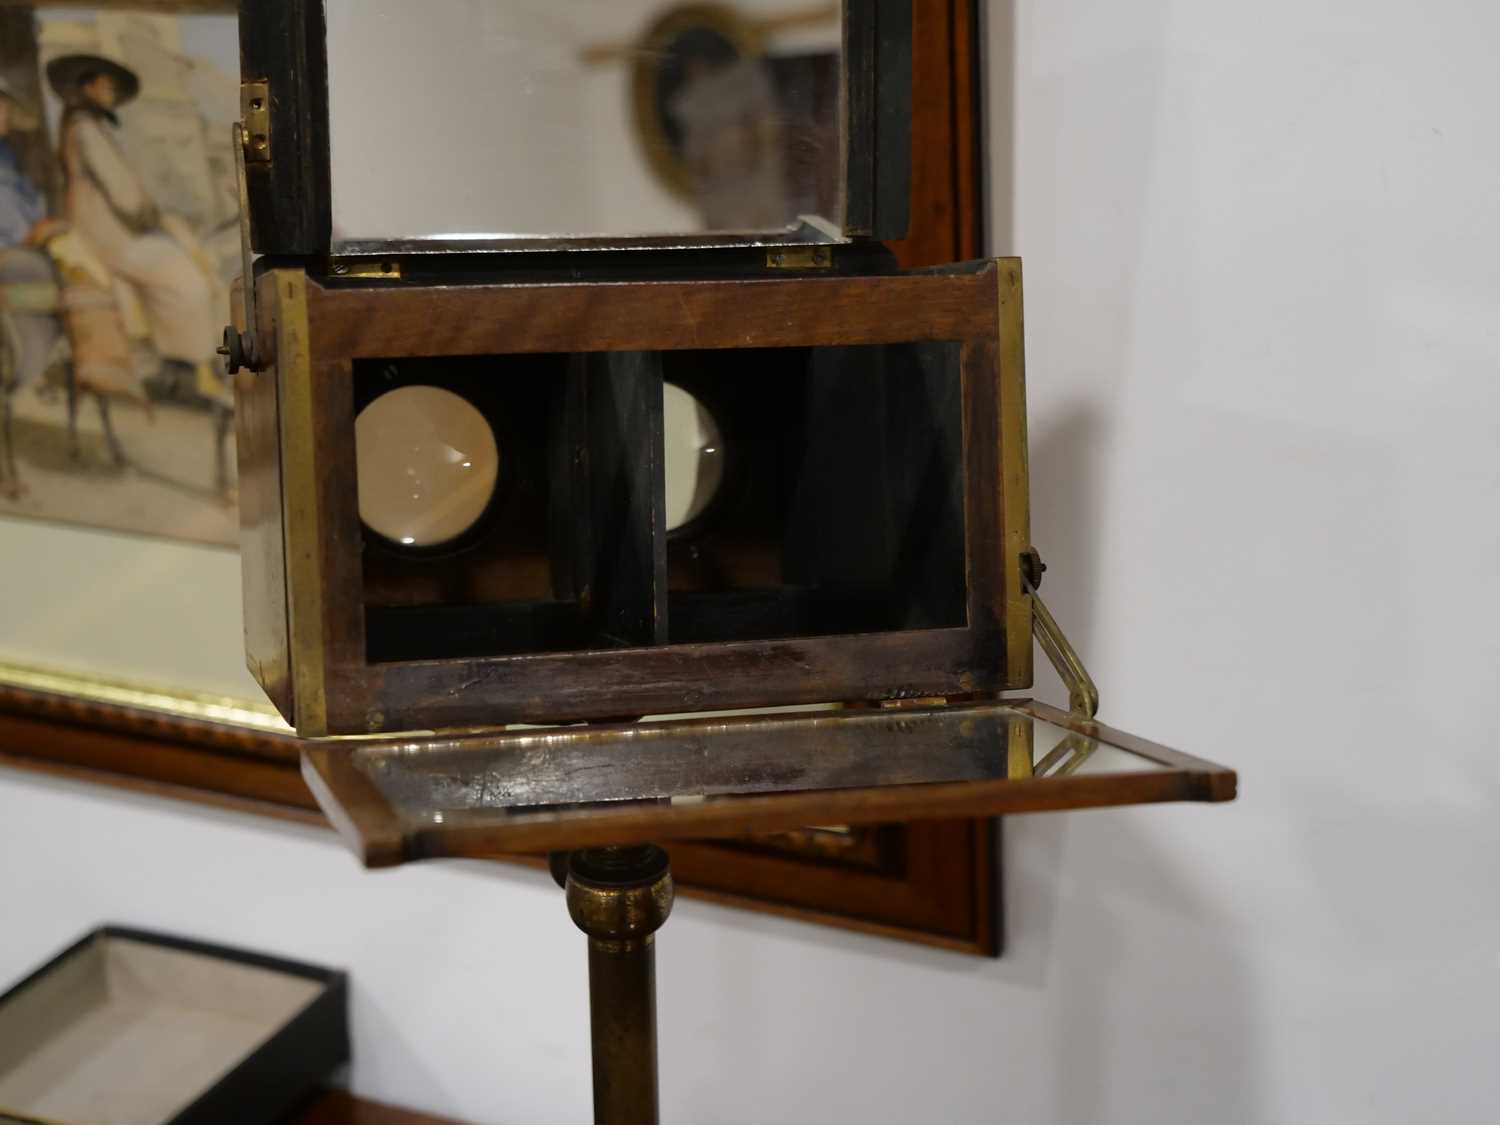 A Negretti & Zambra stereoscopic table viewer, the mahogany box with twin eye shields and ivory - Bild 22 aus 26